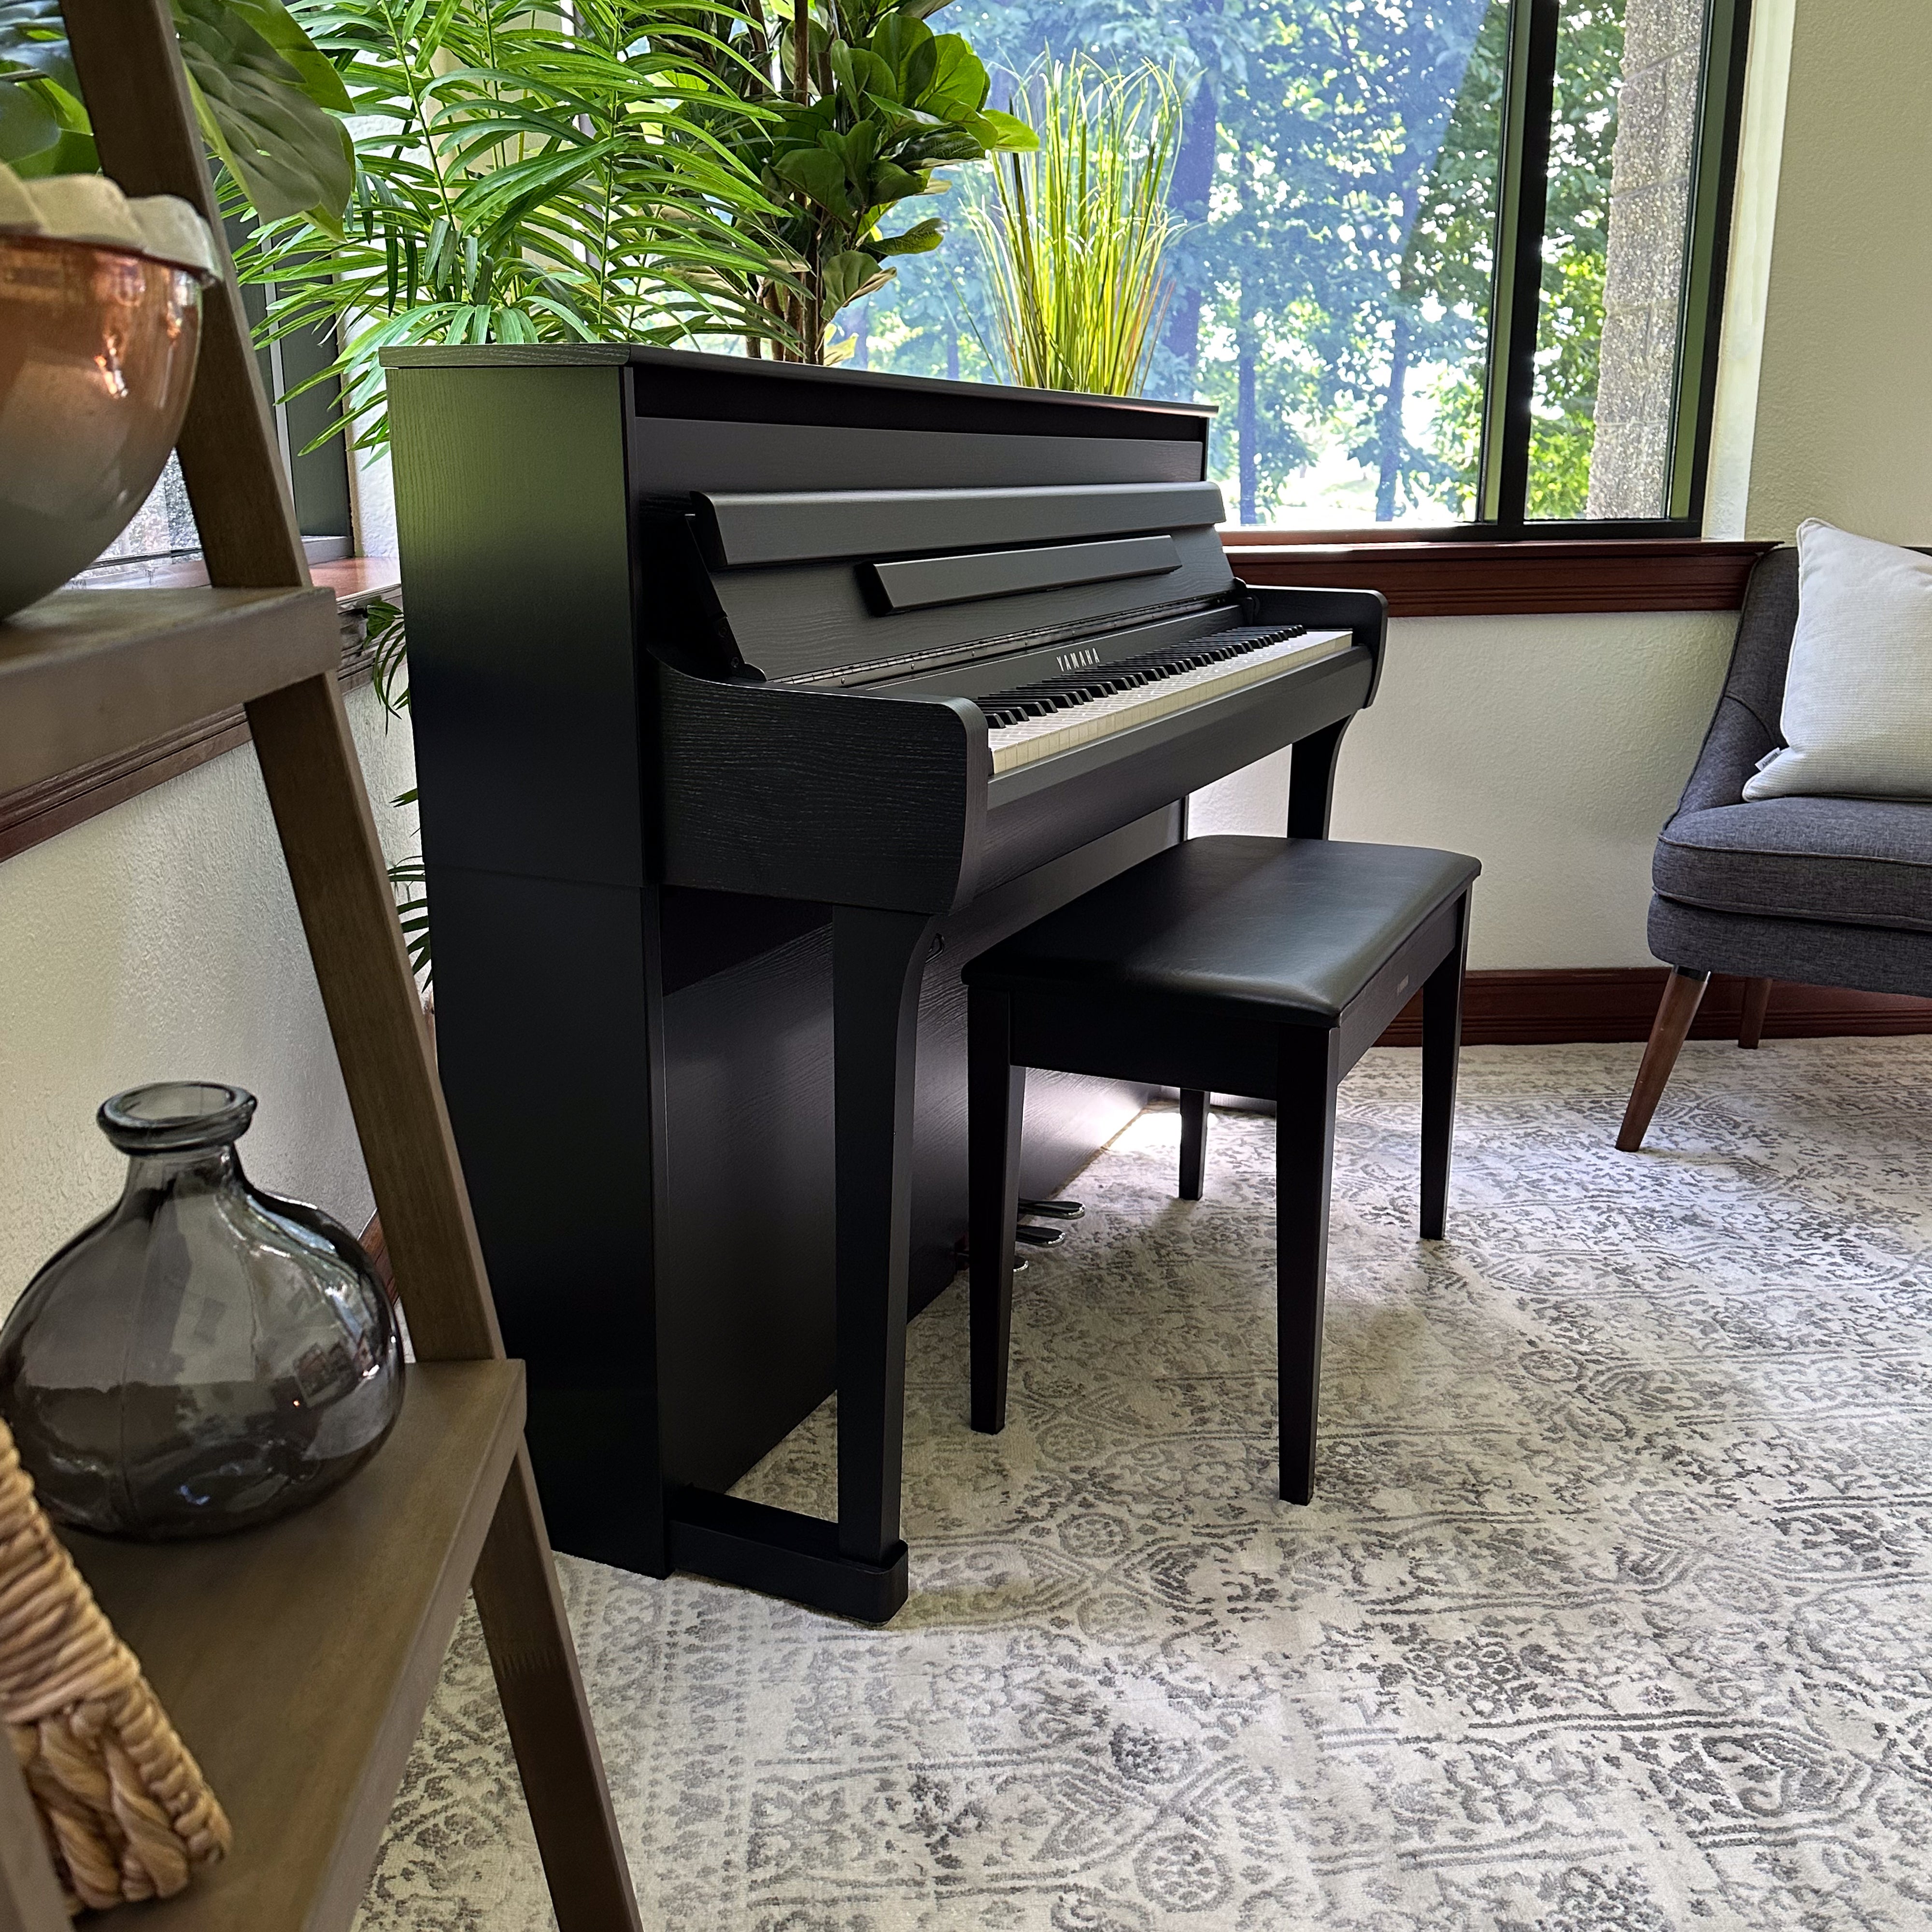 Yamaha Clavinova CLP-885 Digital Piano - Matte Black in a stylish room, side view